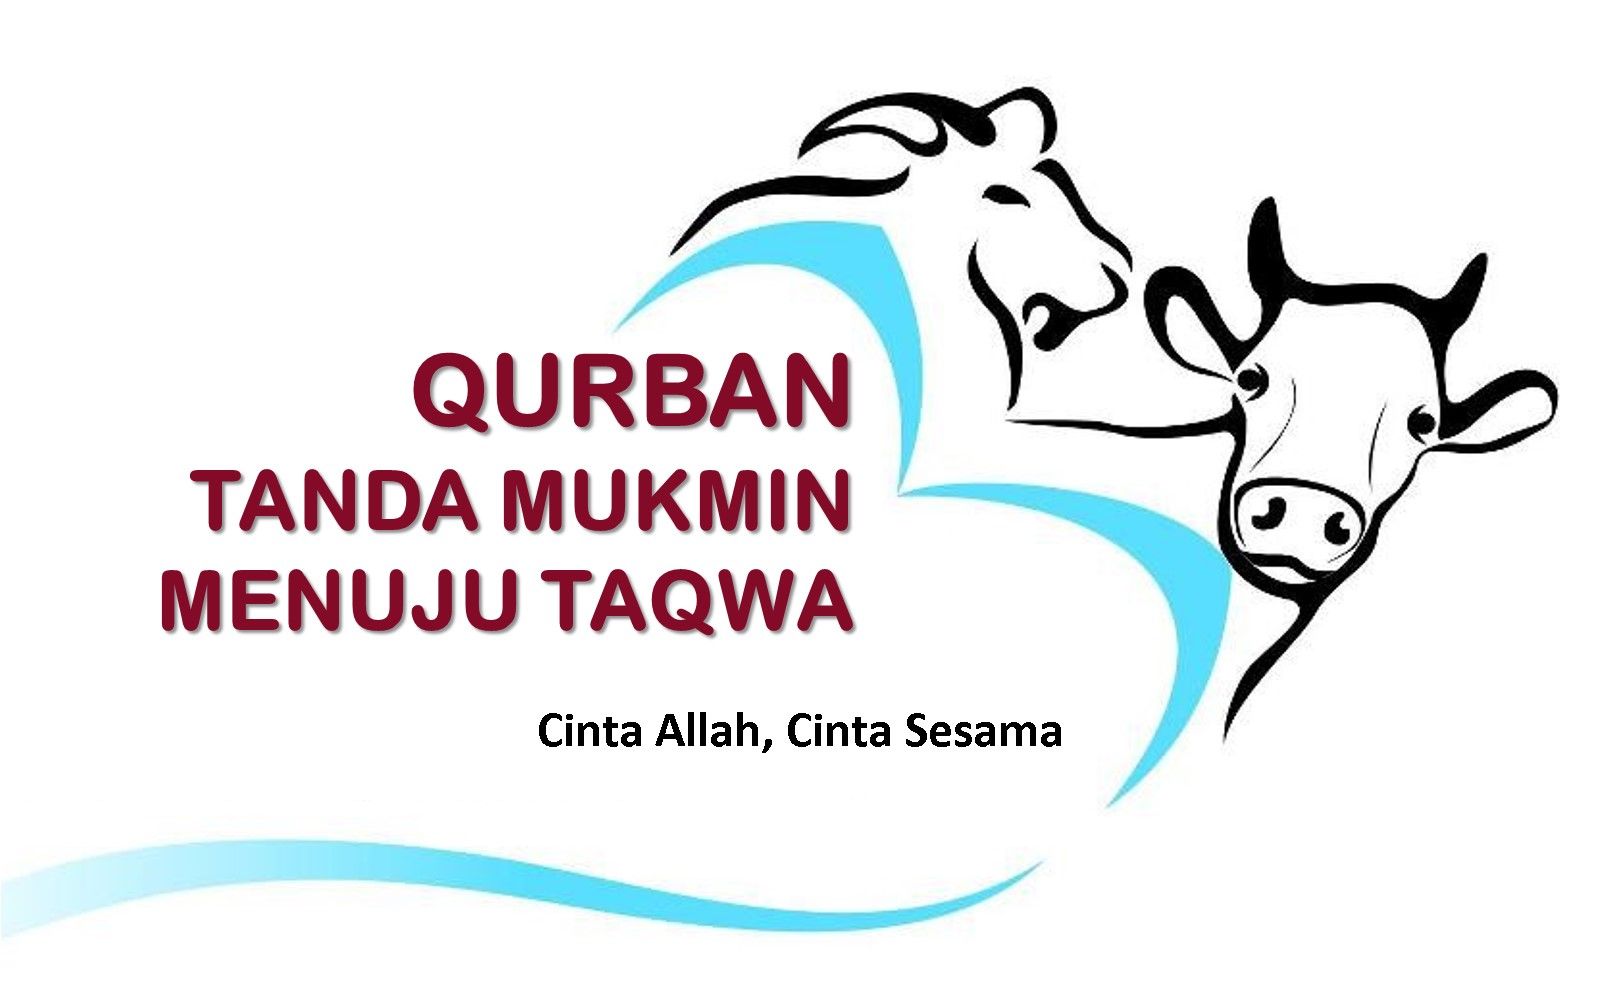 Qurban, Tanda Mukmin Menuju Taqwa - Kompasiana.com